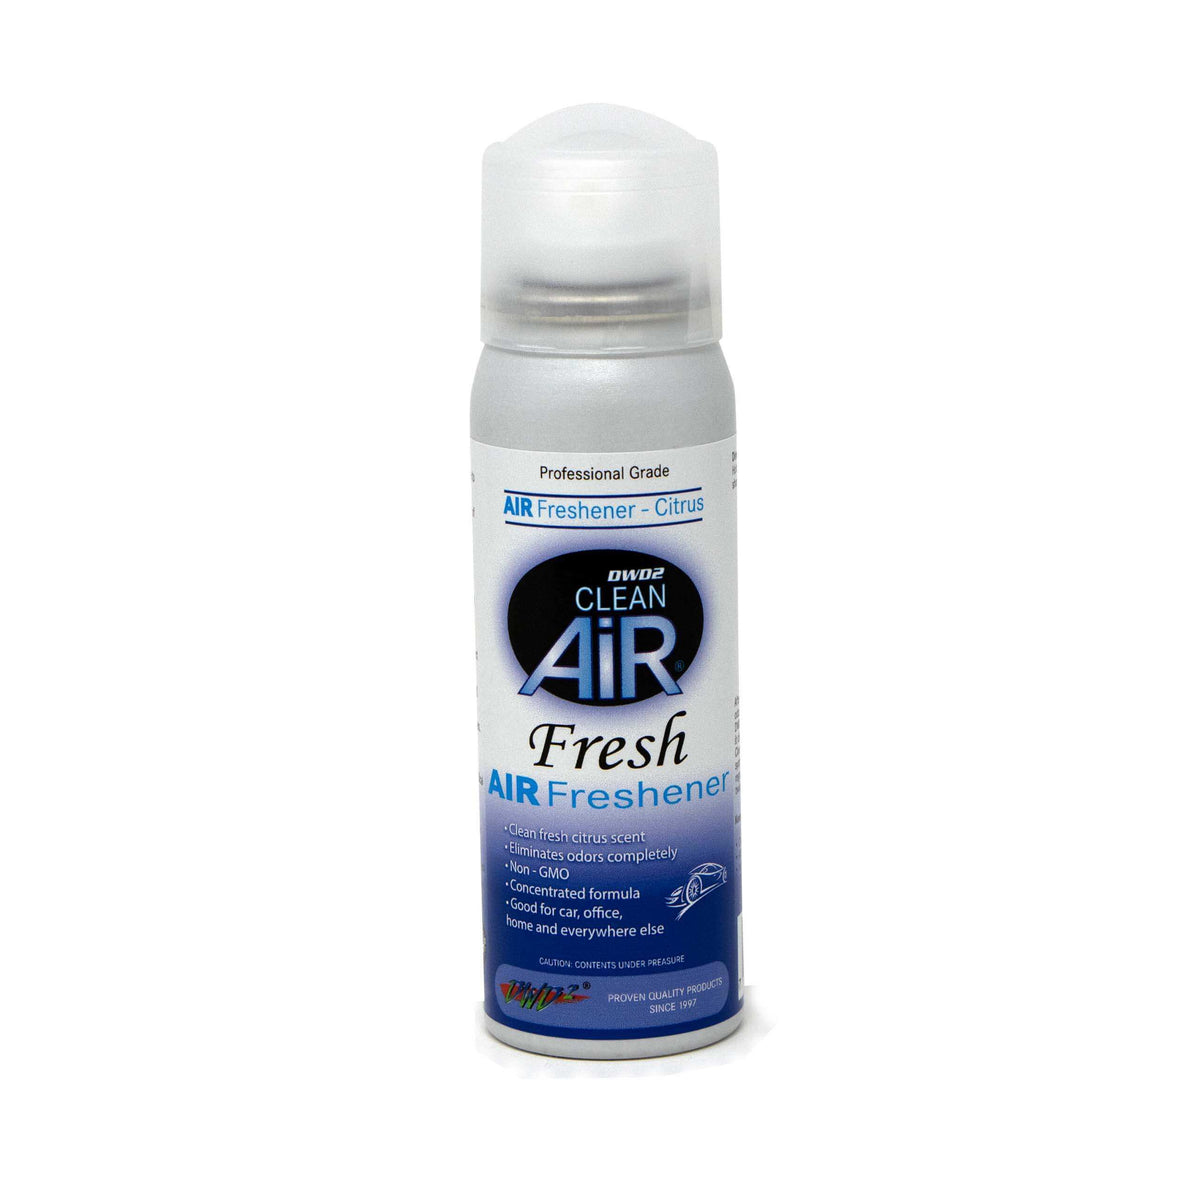 DWD2 Clean Air Fresh Automotive Citrus Air Freshener, Size: 1.5 oz